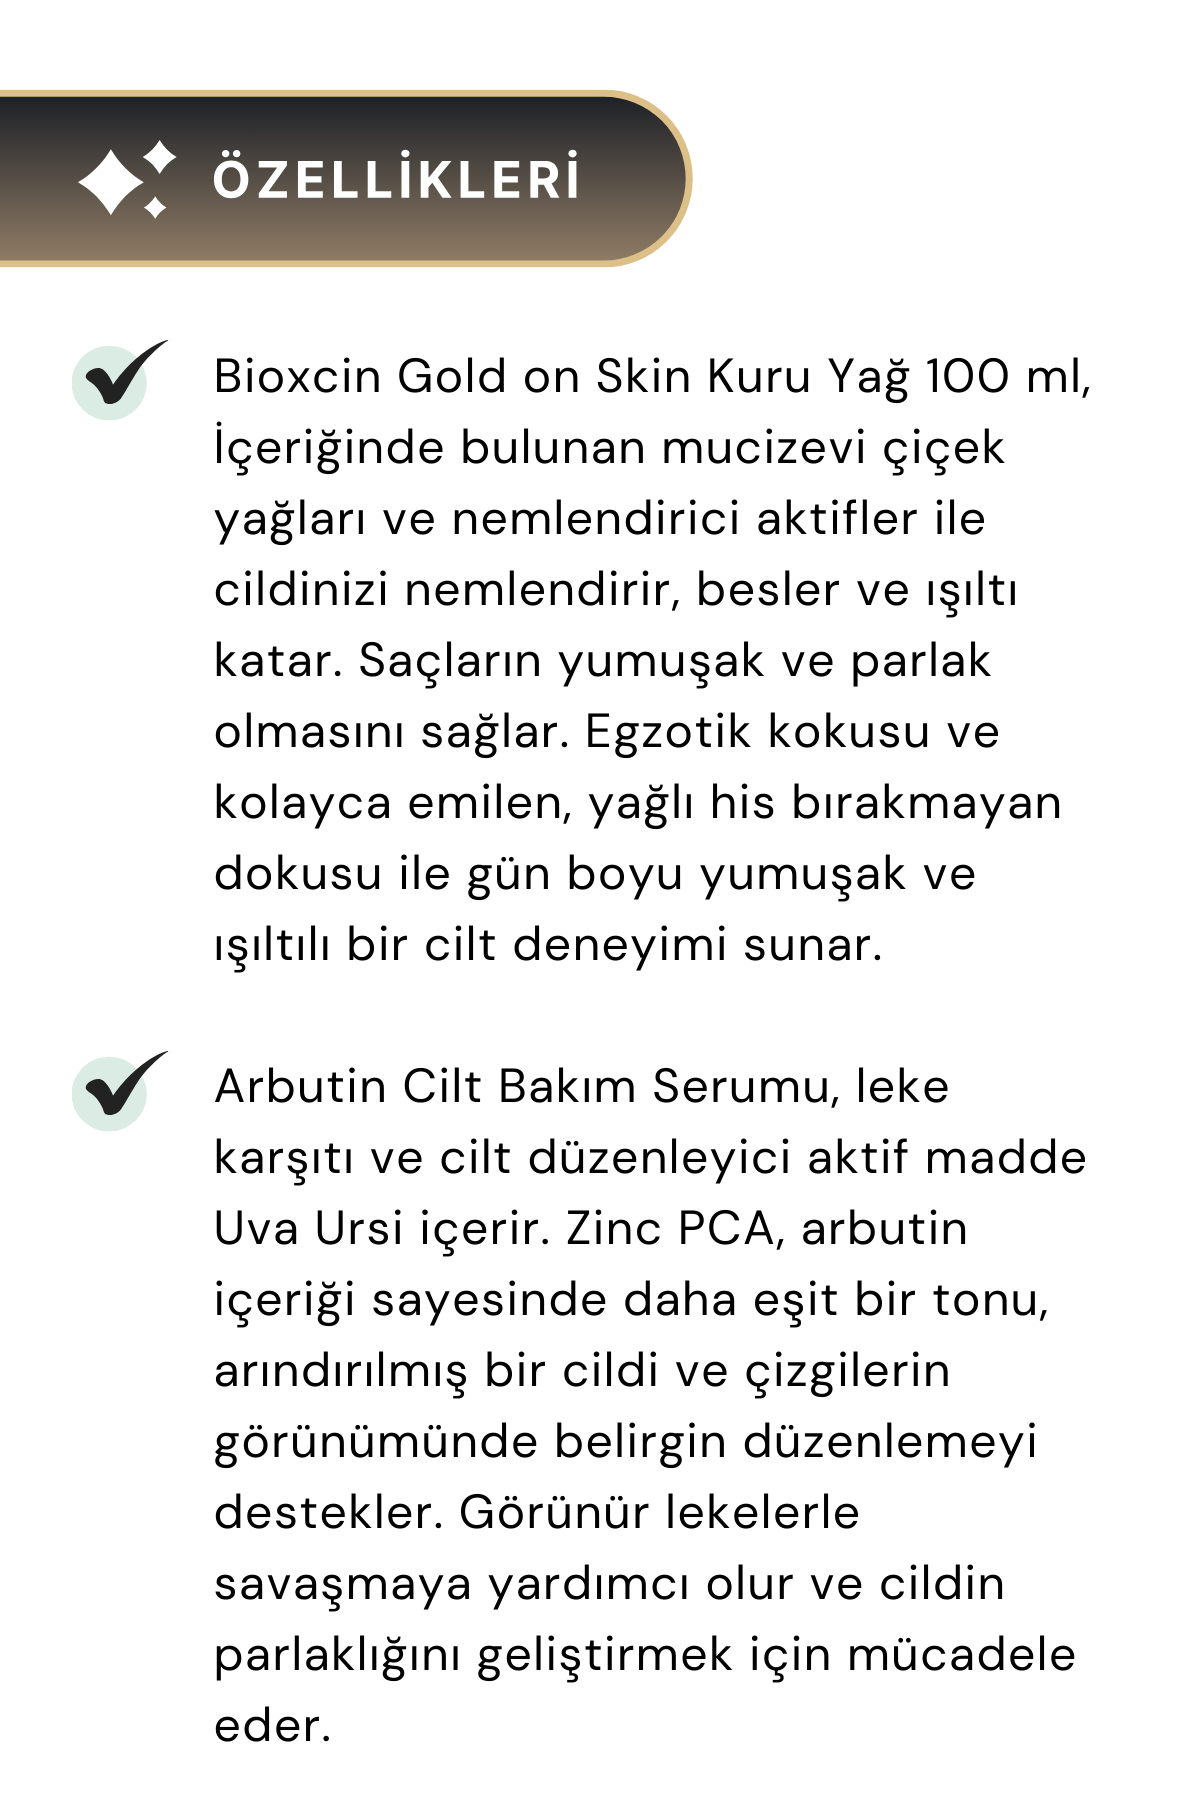 Bioxcin Gold on Skin Kuru Yağ 100 ml & The Fair Arbutin Leke Karşıtı Cilt Serumu 30 ml